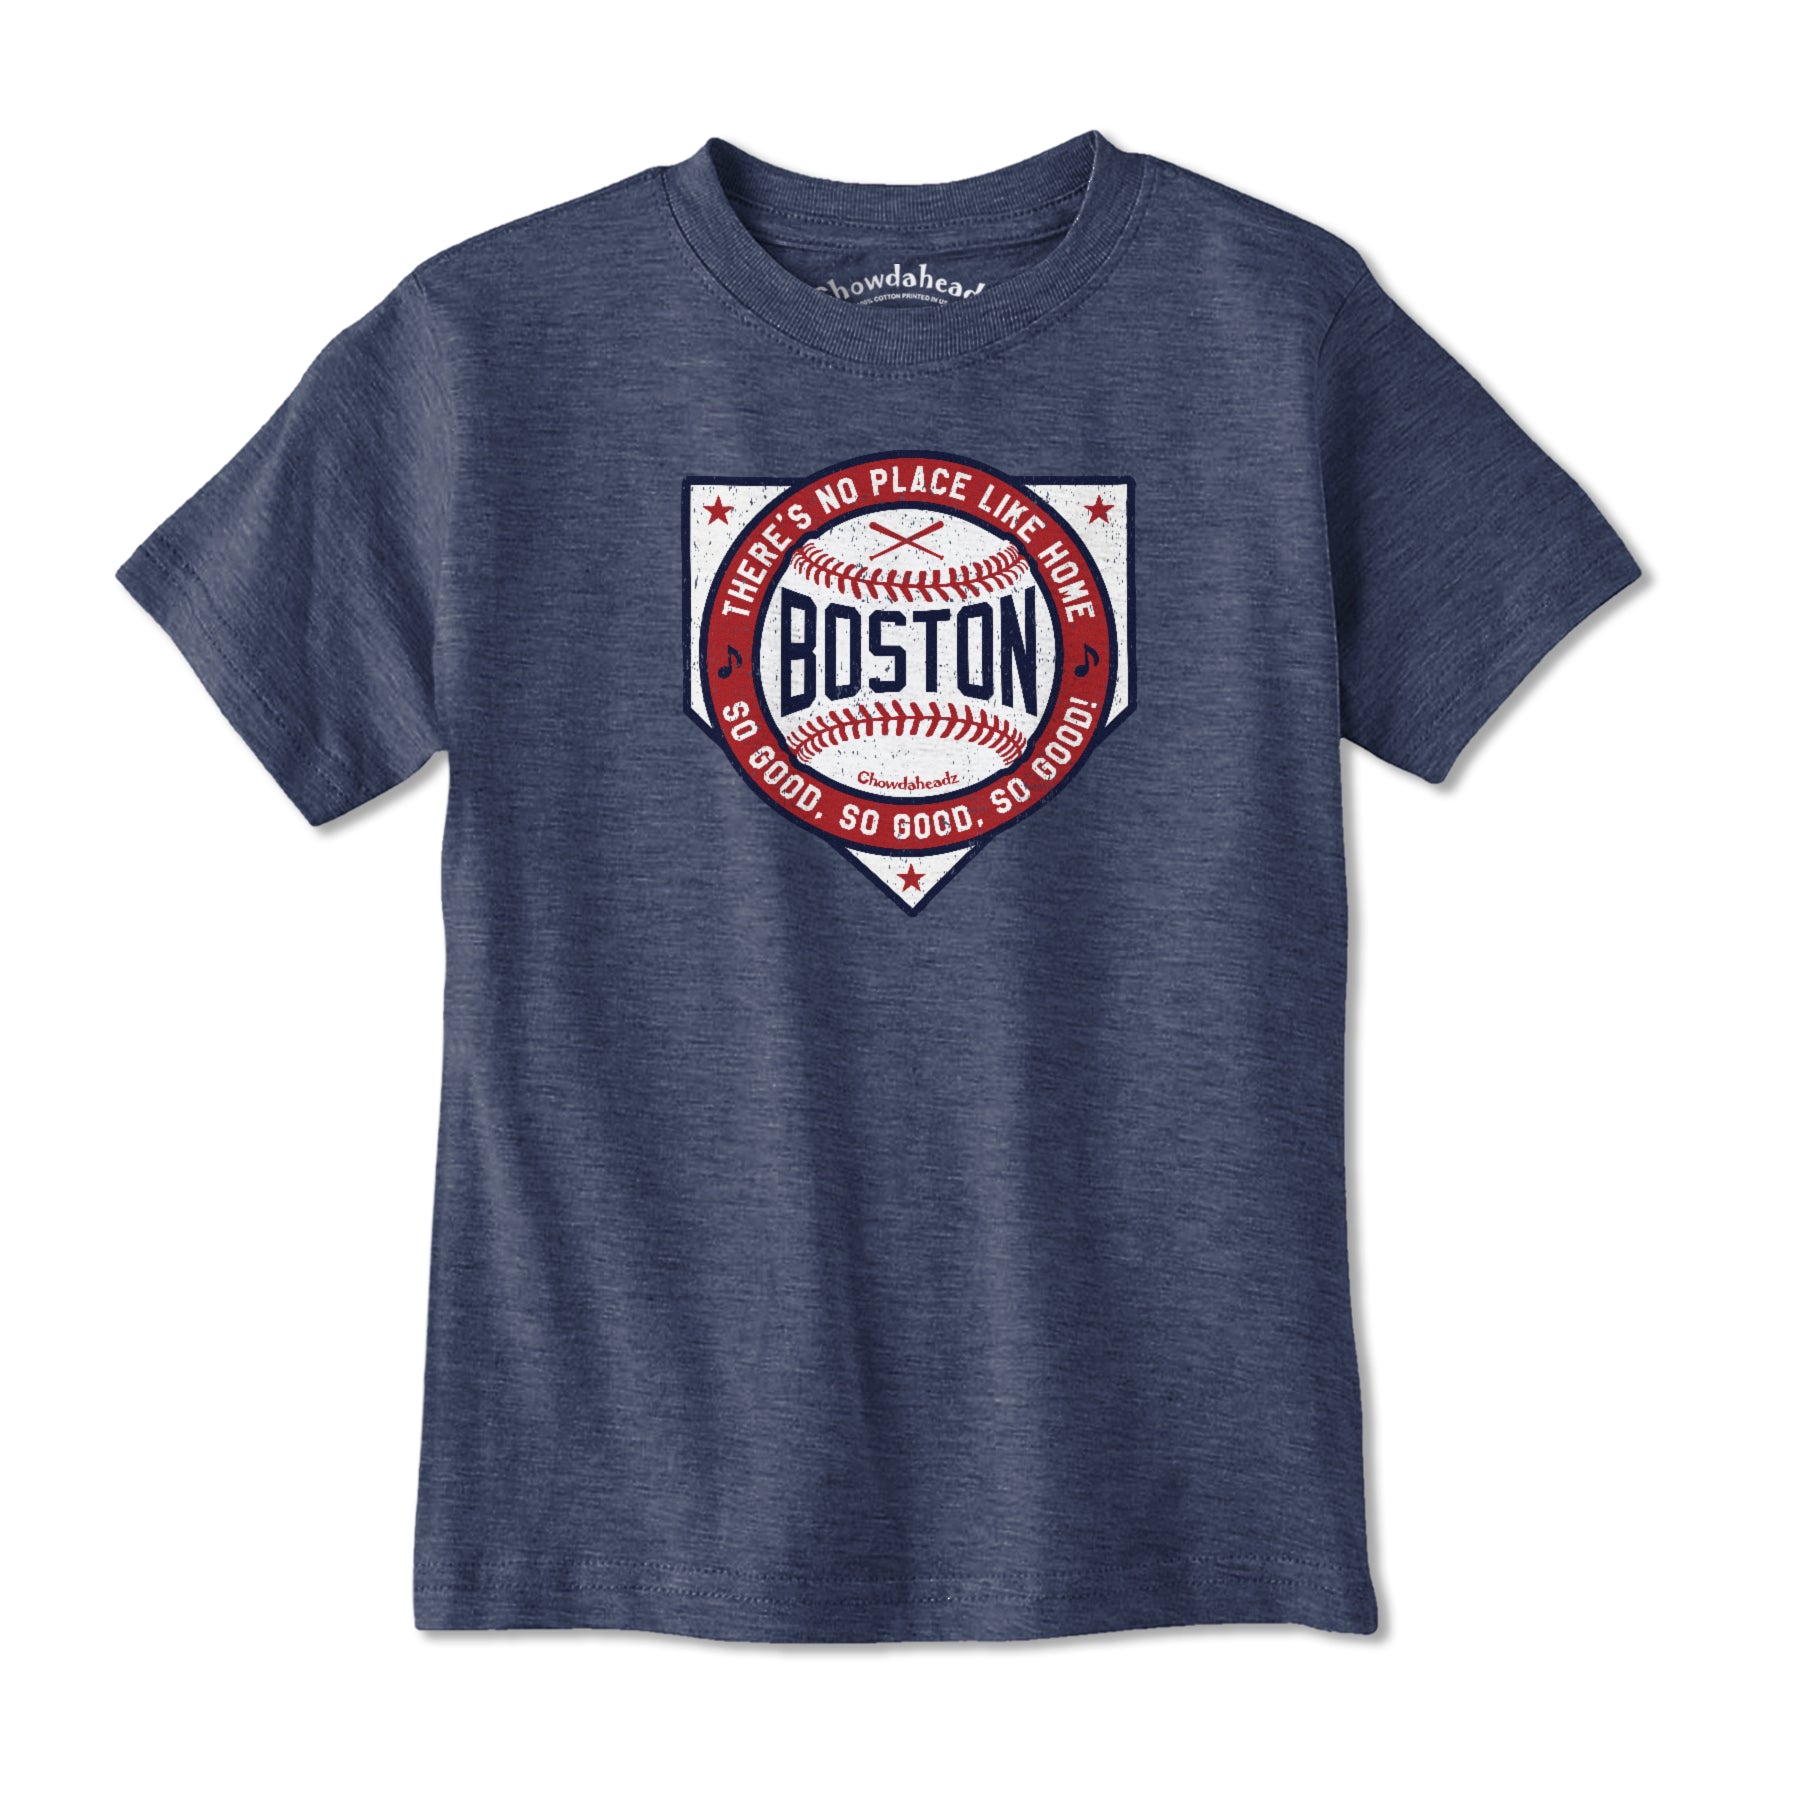 Boston There's No Place Like Home Baseball Youth T-Shirt - Chowdaheadz